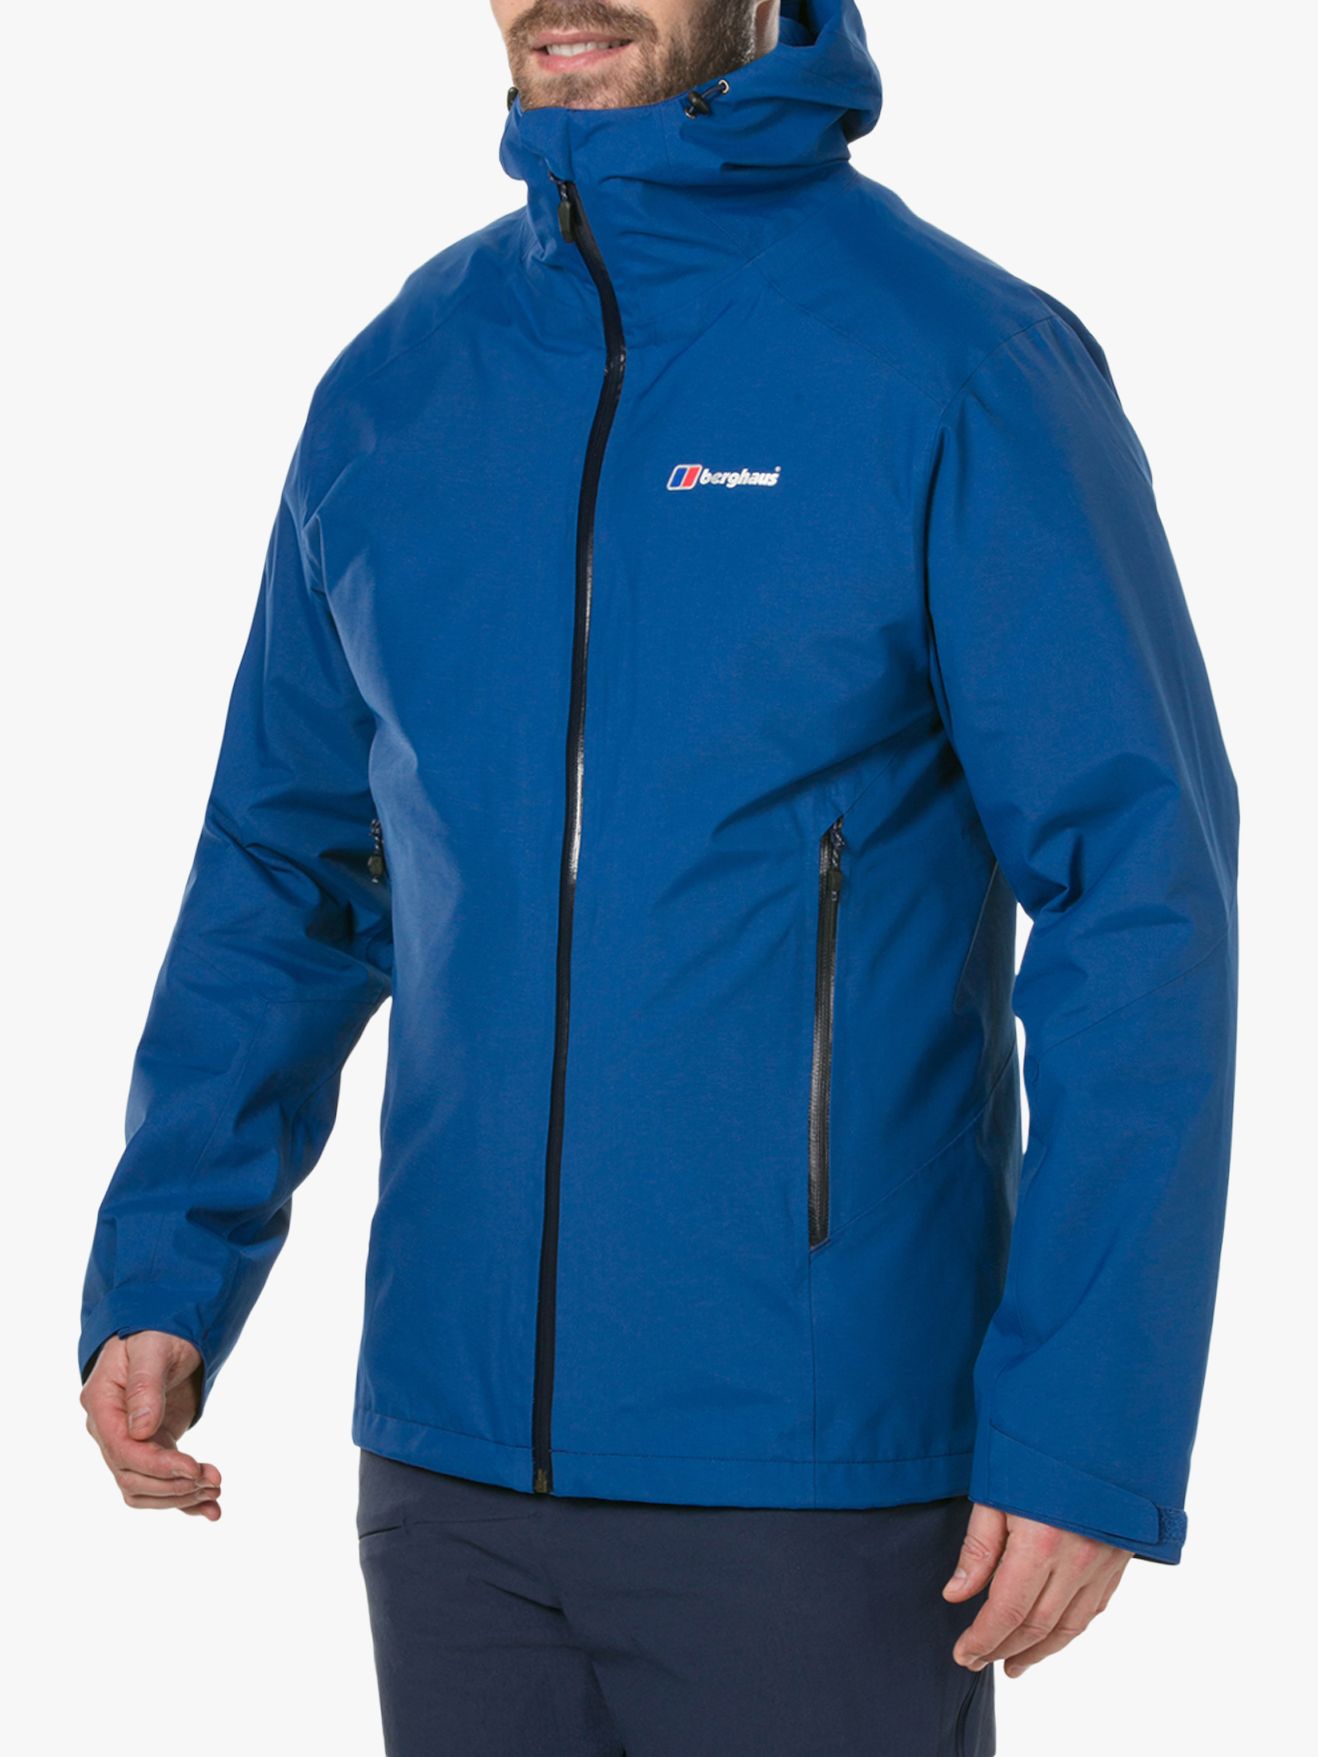 berghaus triclimate jacket